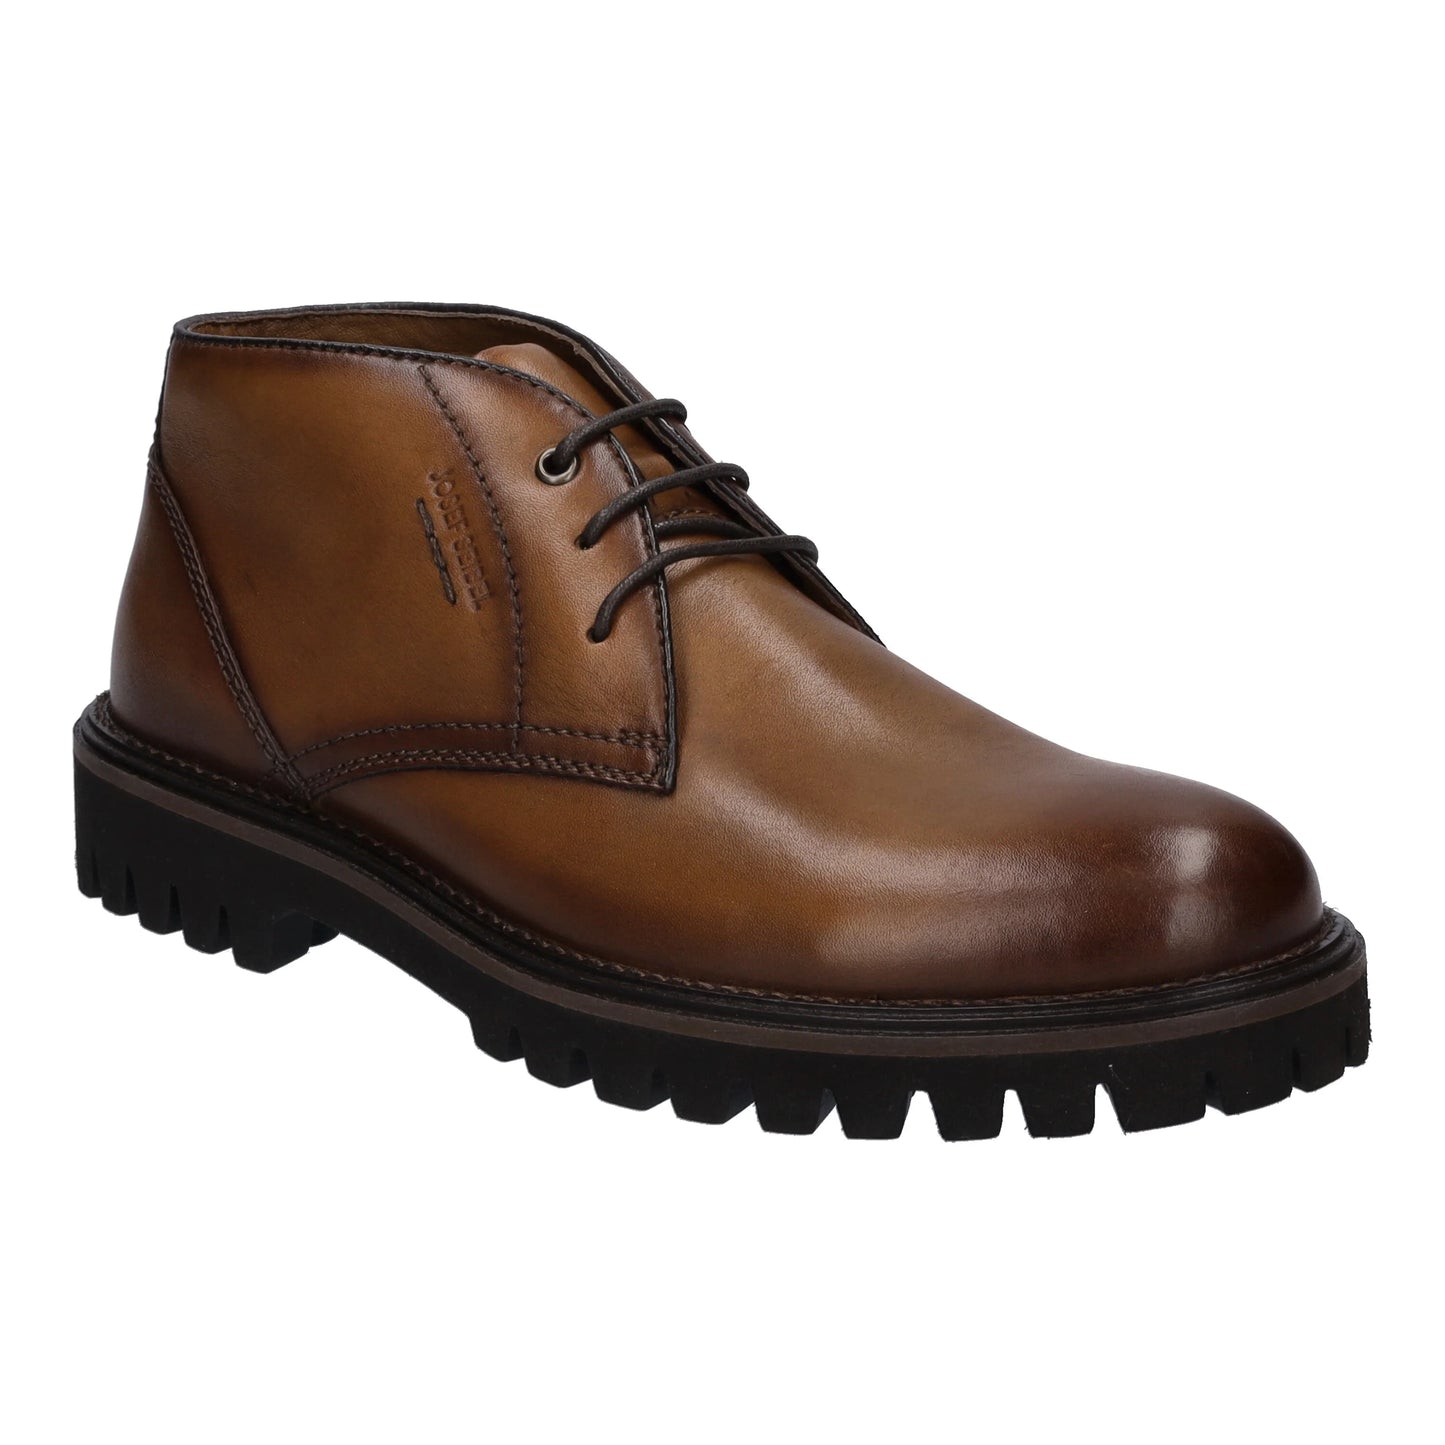 Josef Seibel Men's Romed 03 Leather Lace-Up Boots Cognac Brown